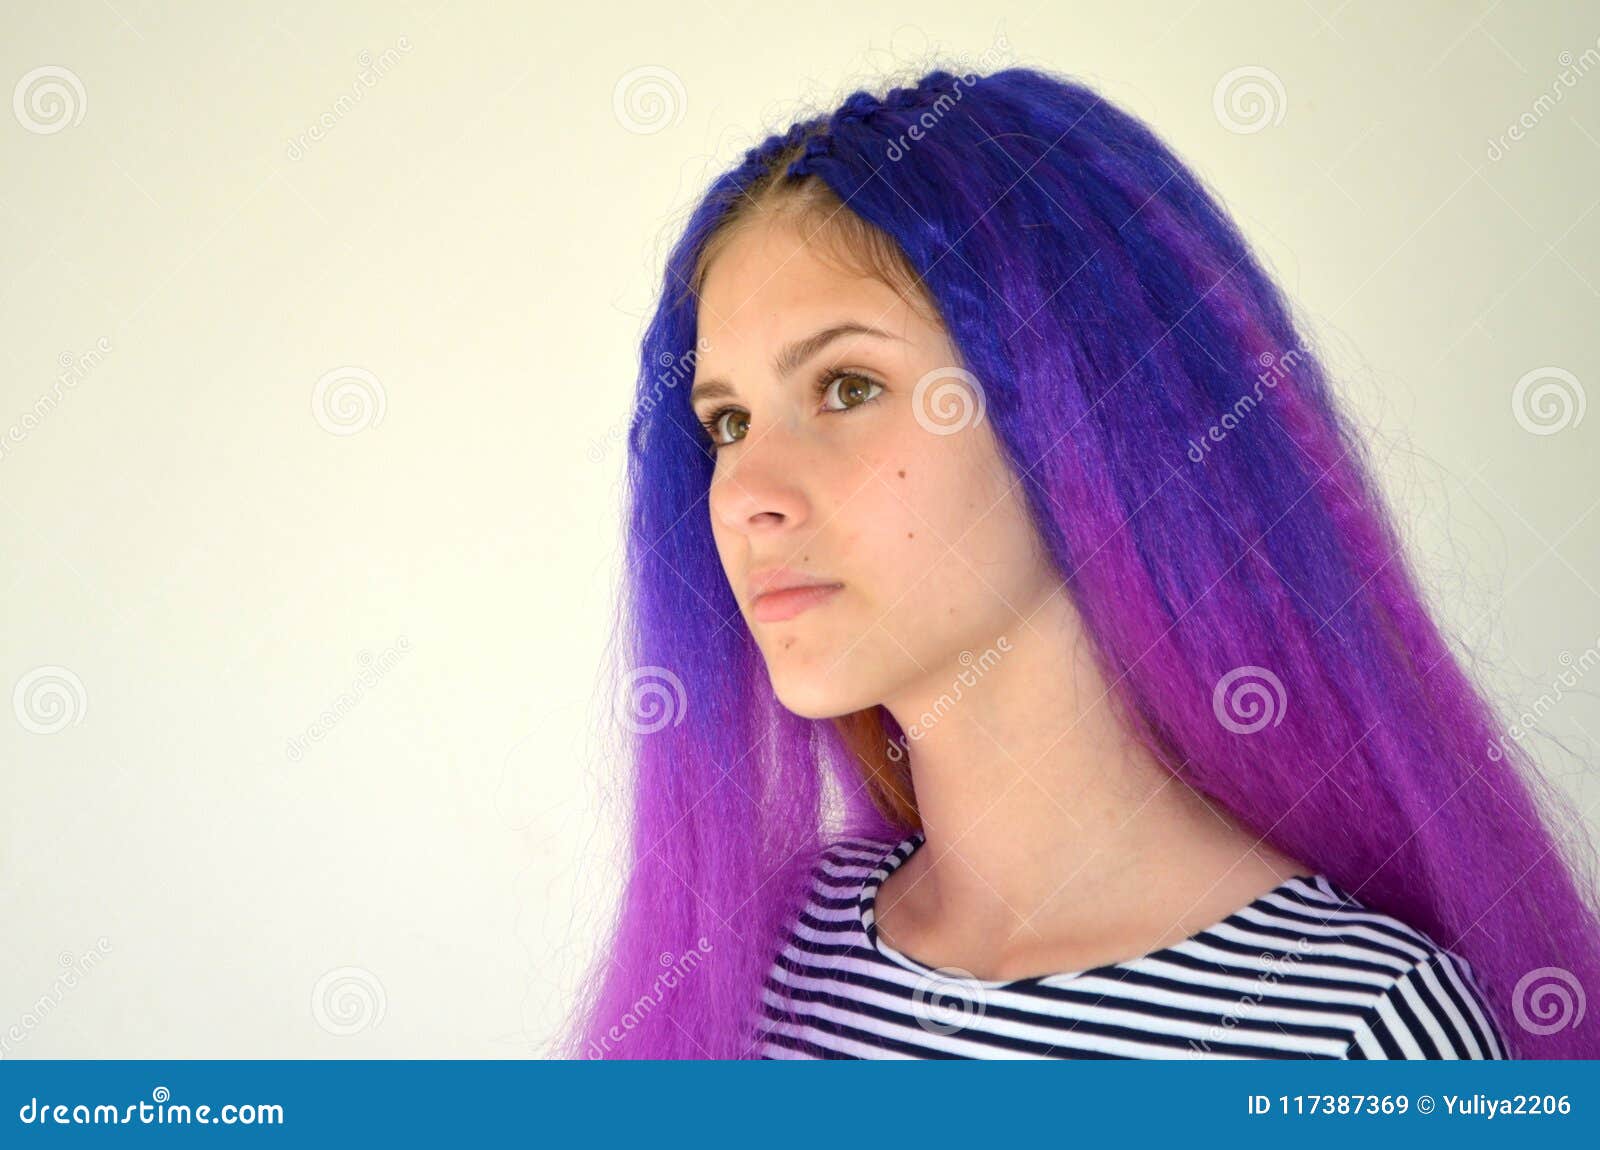 blue purple hair weave